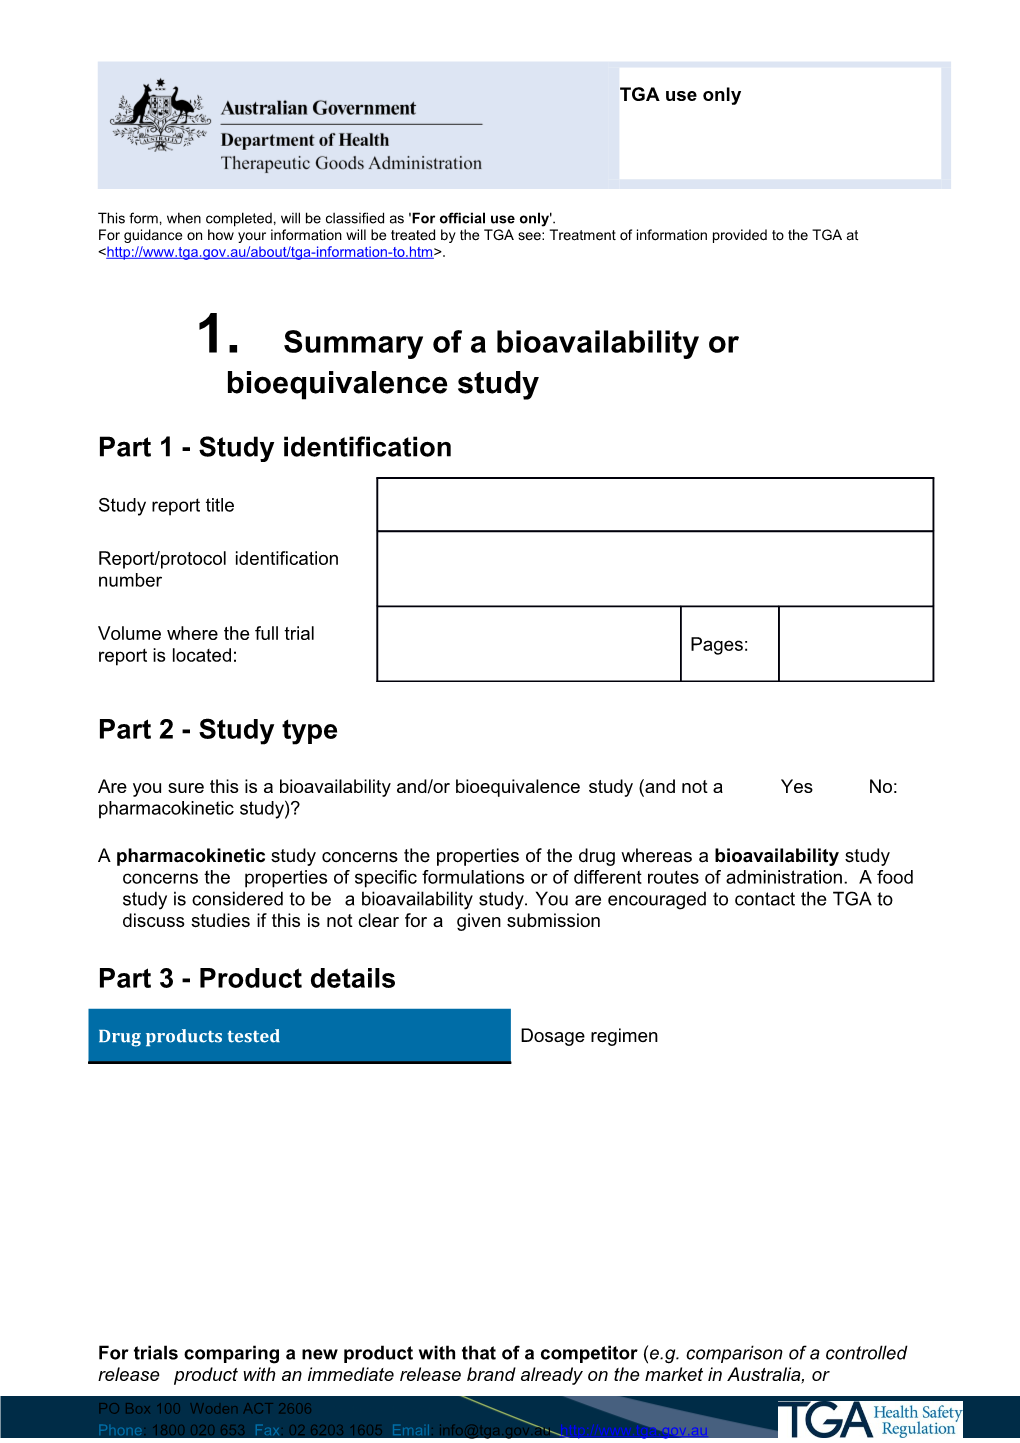 Summary of a Bioavailability Or Bioequivalence Study